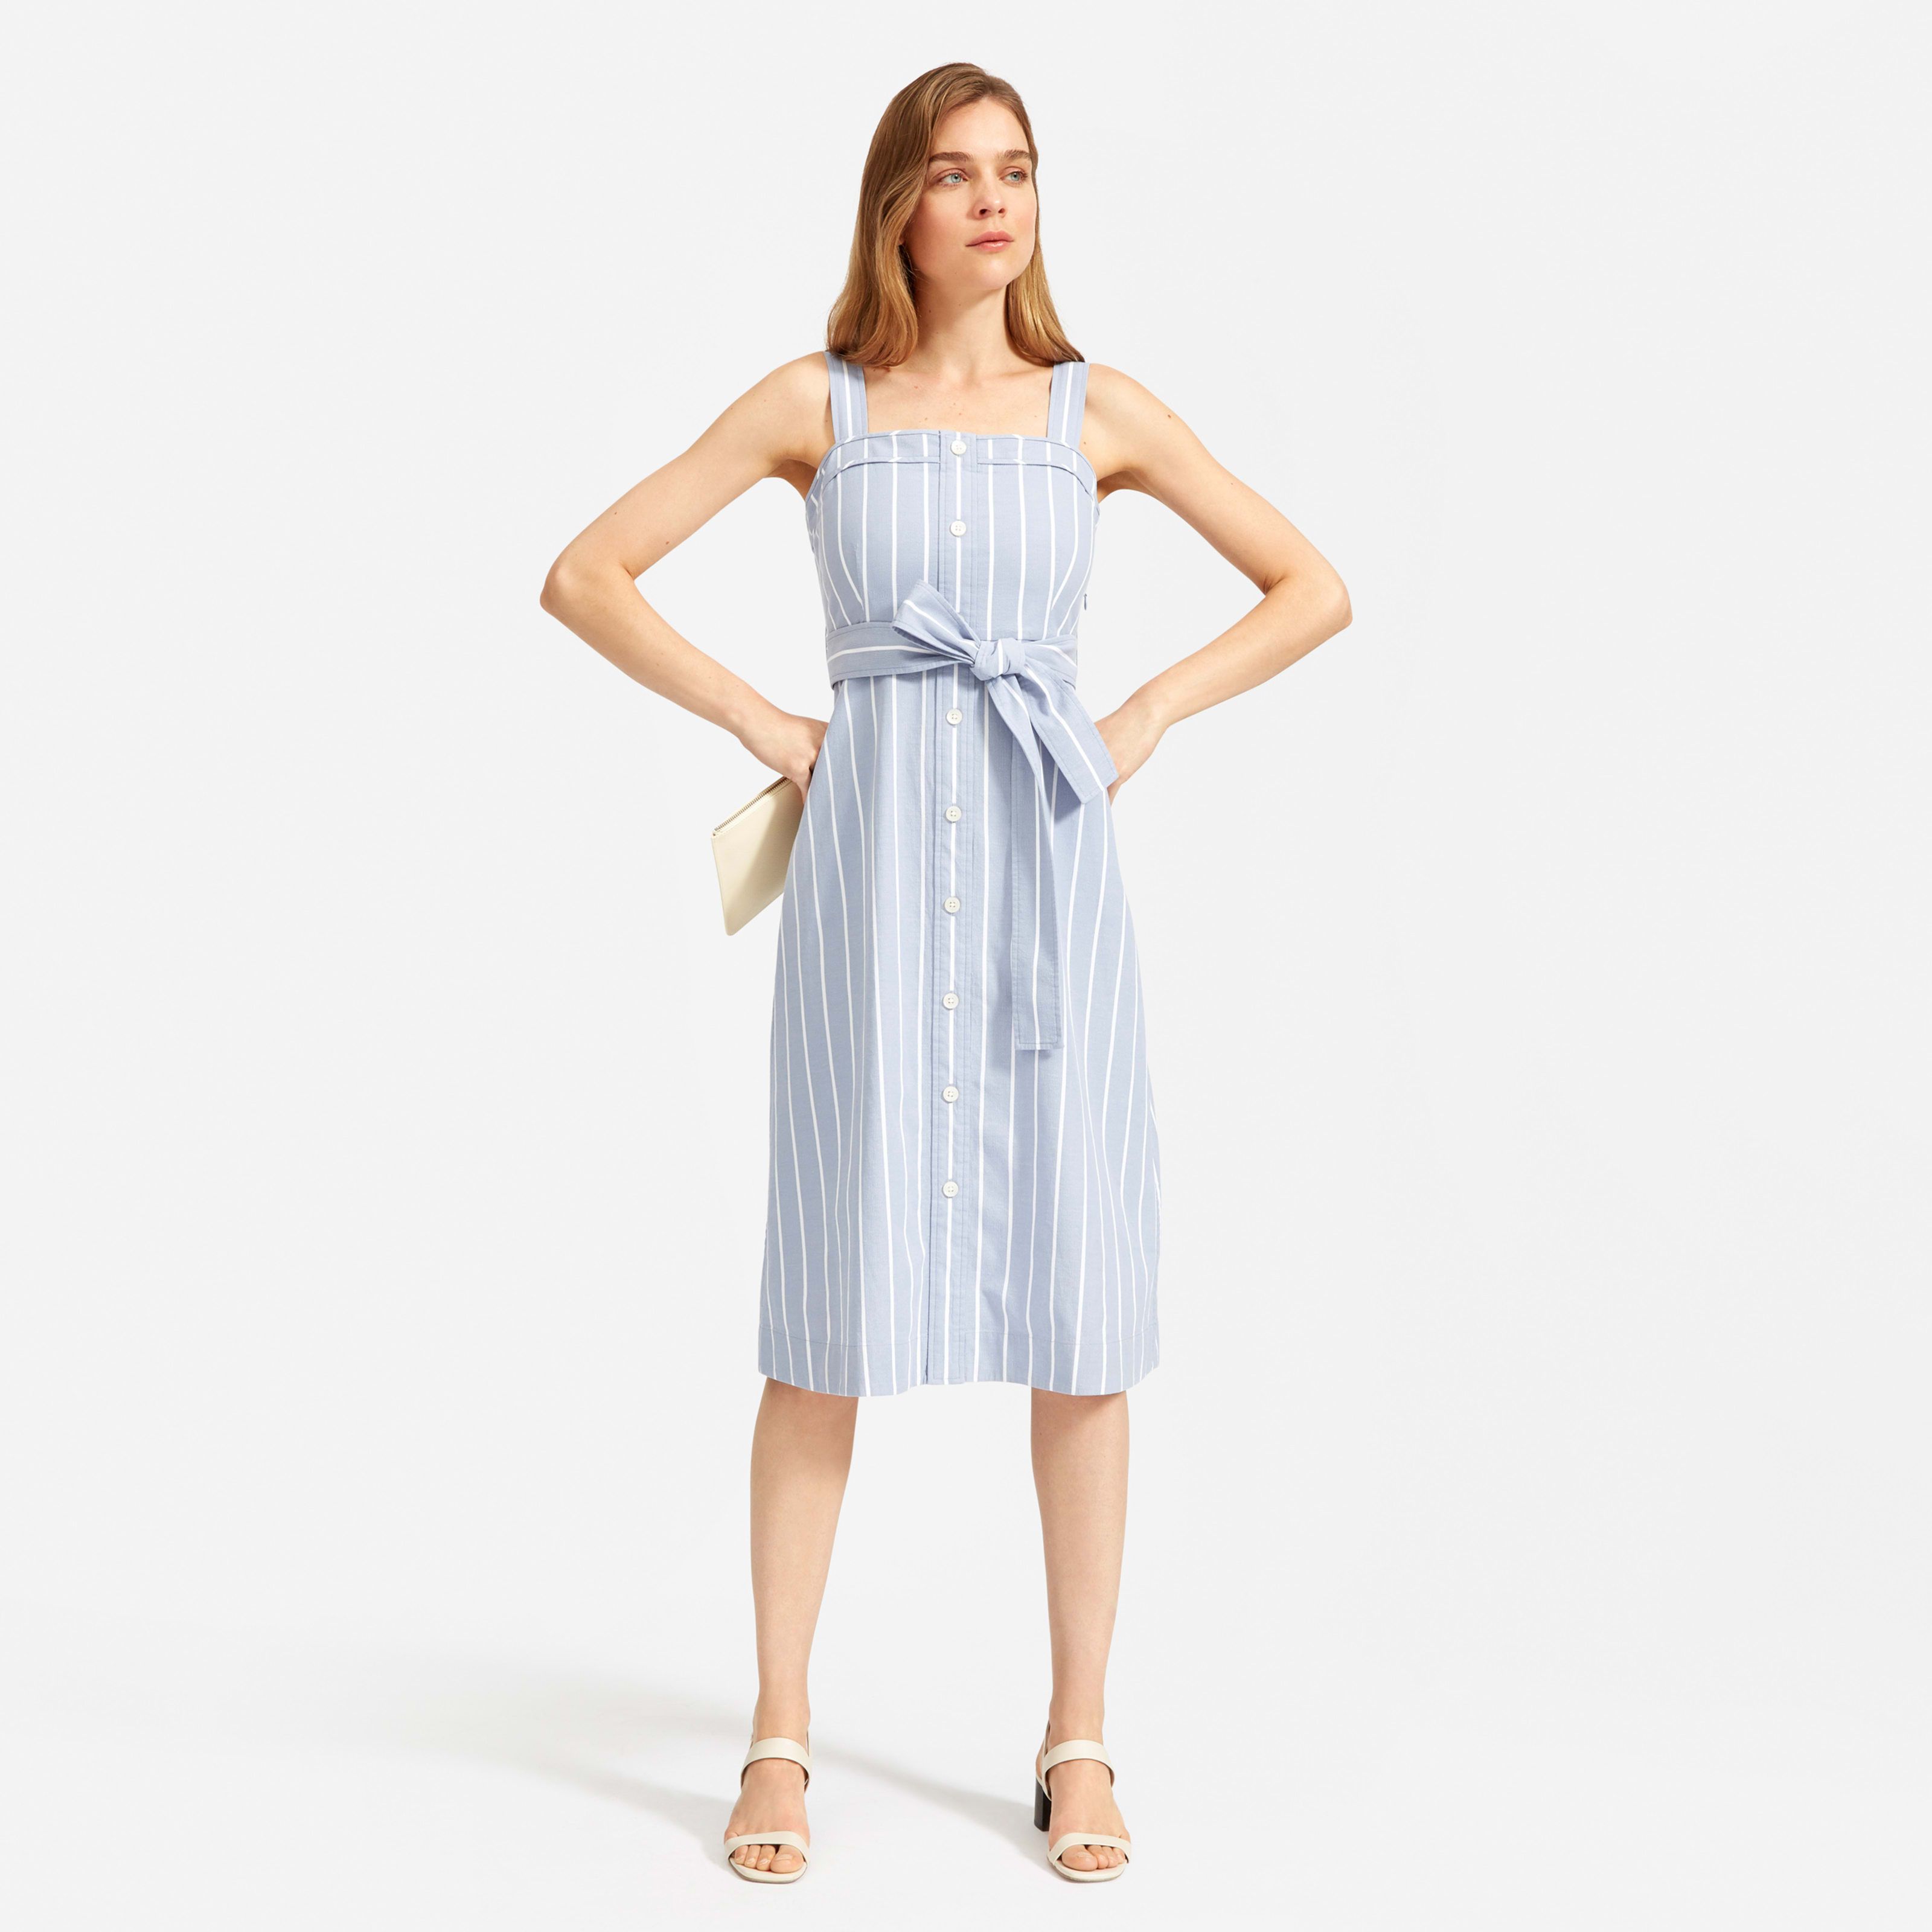 Women's Cotton Weave Tank Dress by Everlane in Blue / White Wide Stripe, Size 16 | Everlane